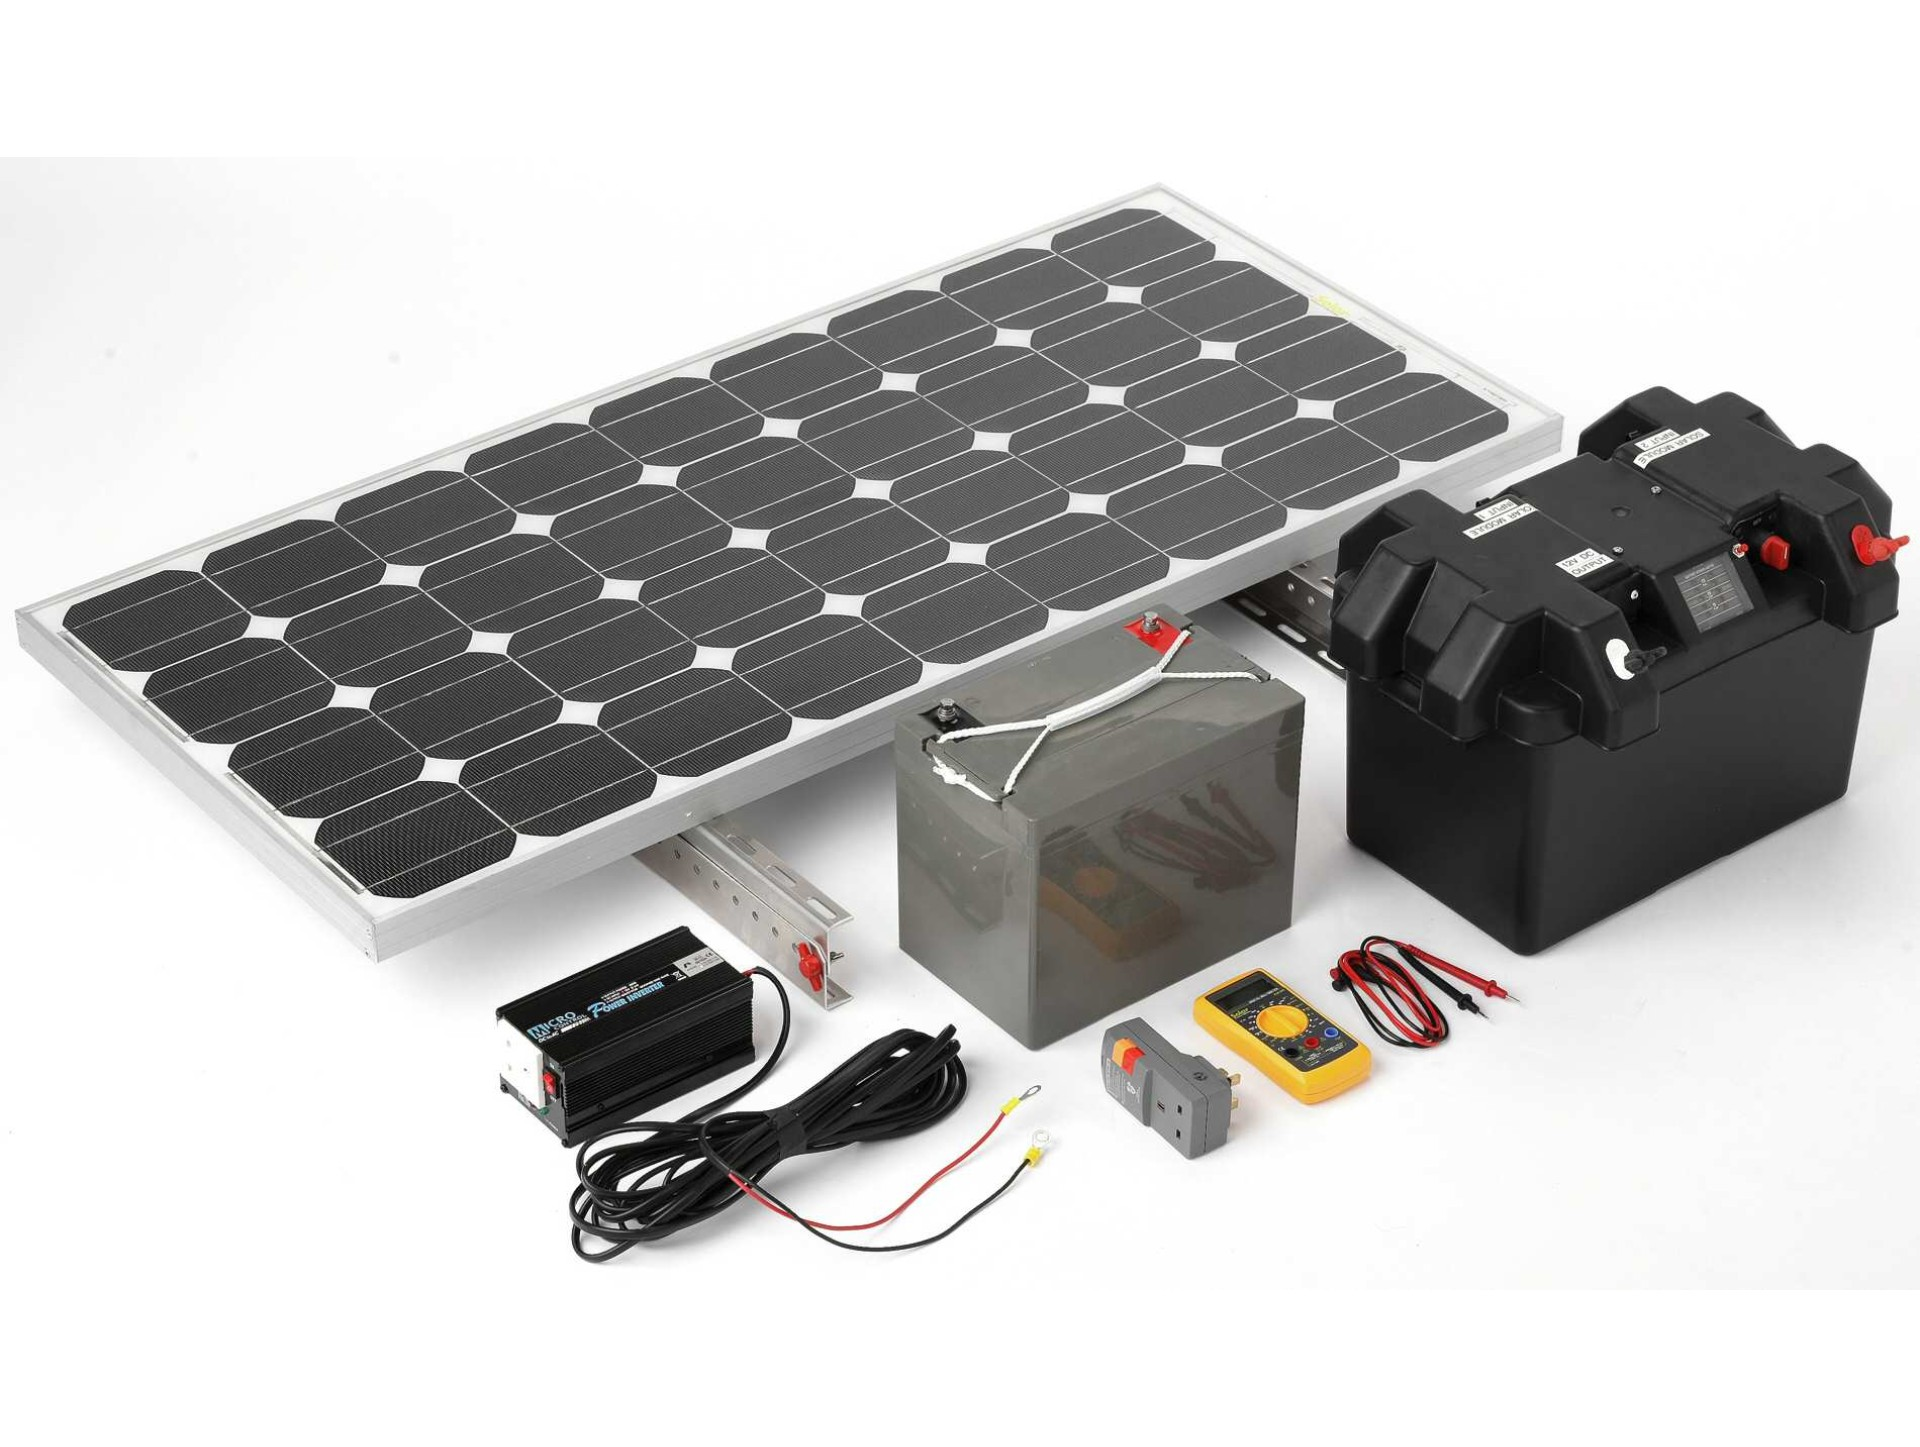 Комплект солнечной батареи с аккумулятором. Солнечные батарея Solar Panel. Солнечная электростанция Delta комплект. Солнечная панель Delta Solar. Солнечная панель Jarret Solar 150 Watt.